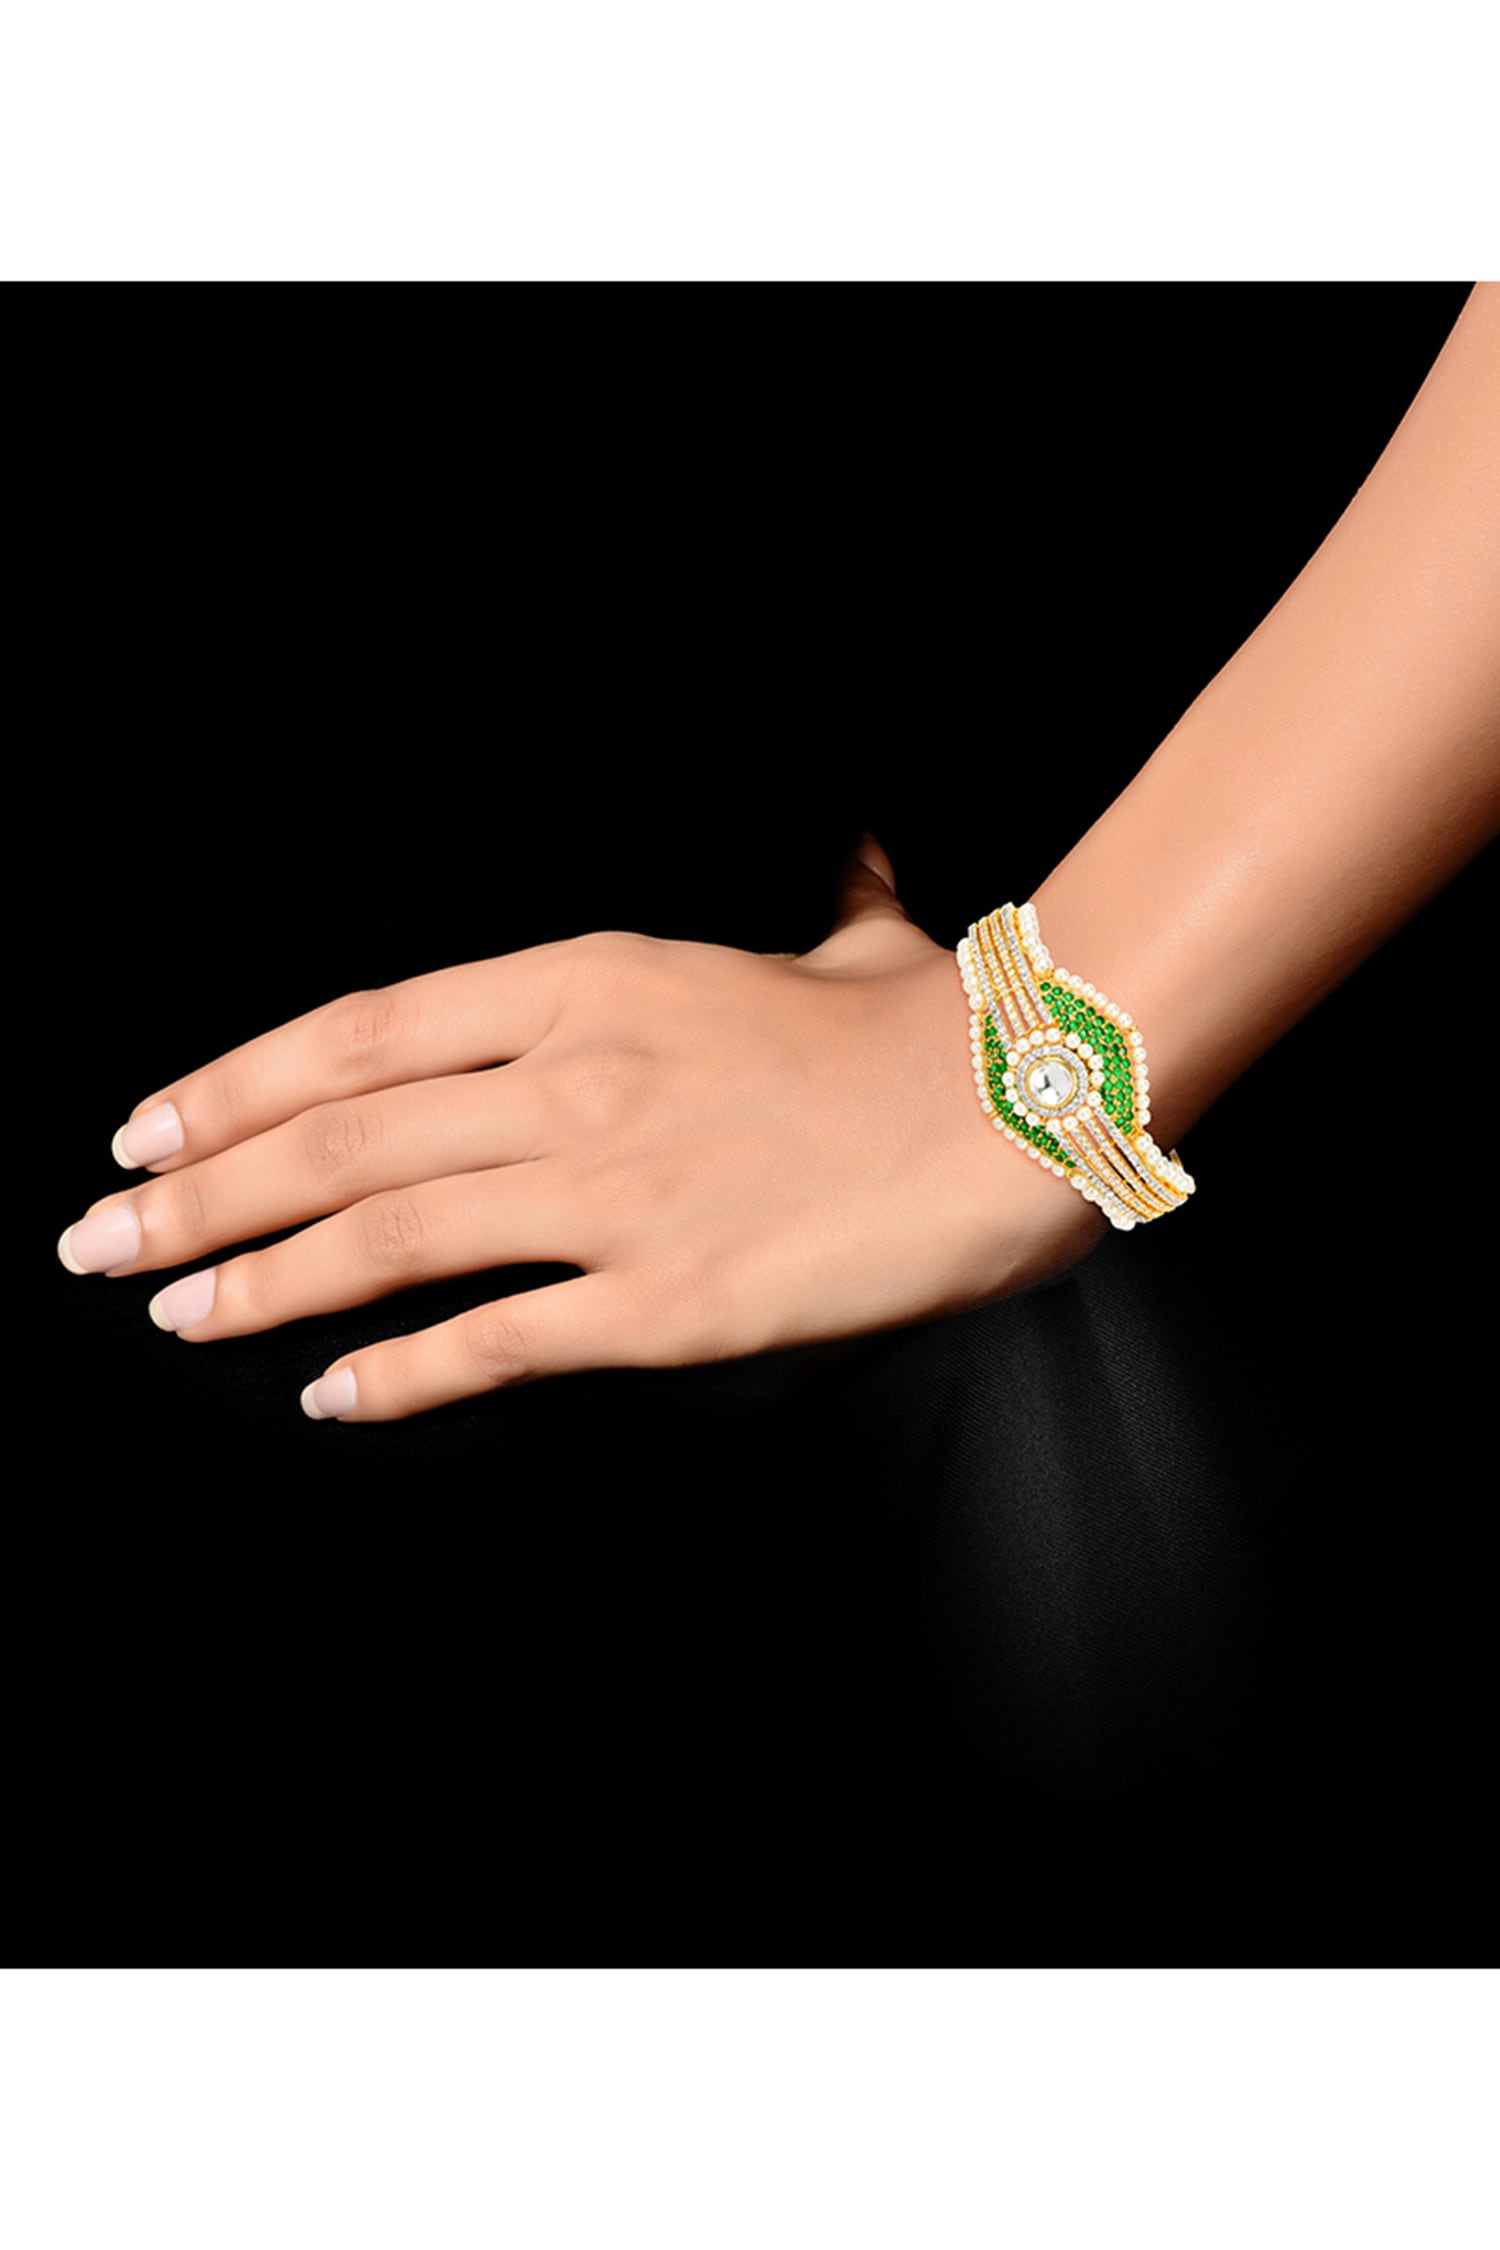 7mm Genuine Natural Green Emerald Crystal Round Beads Bracelet Gemstone  Crystal Women Stone Rarest Bracelet Jewelry AAAAA  AliExpress